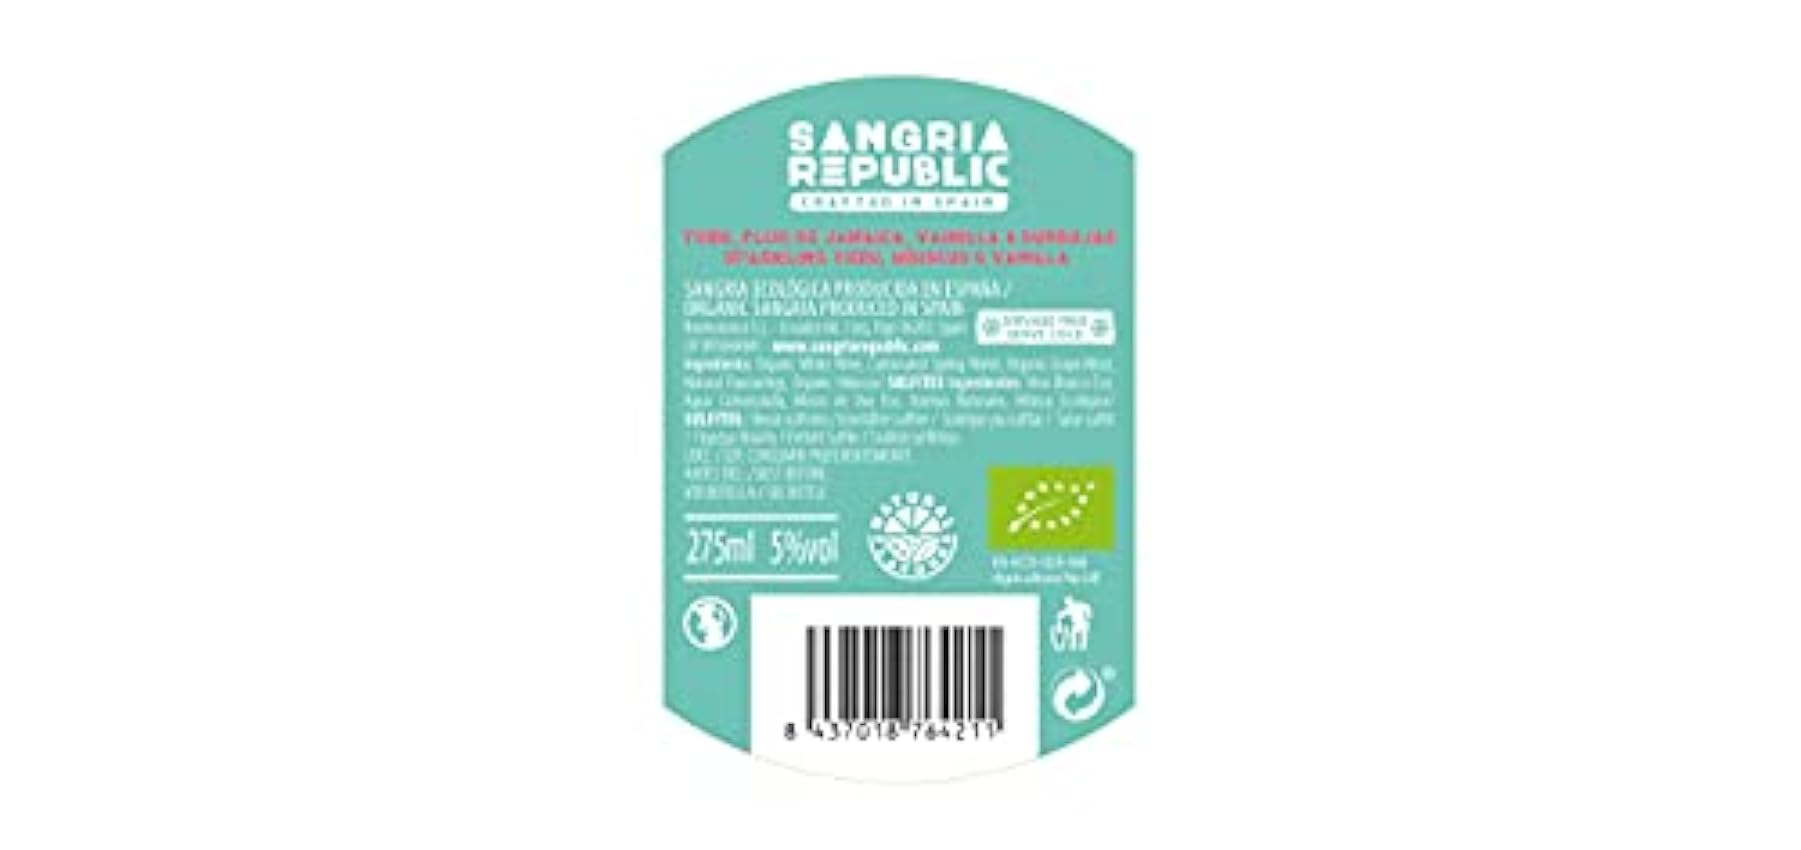 SANGRIA REPUBLIC - PACK 12 Sangría Bebida Refrescante Ecológica Vegana Sin Gluten | Sabor Yuzu, Hibiscus & Vainilla HVeHjfq4